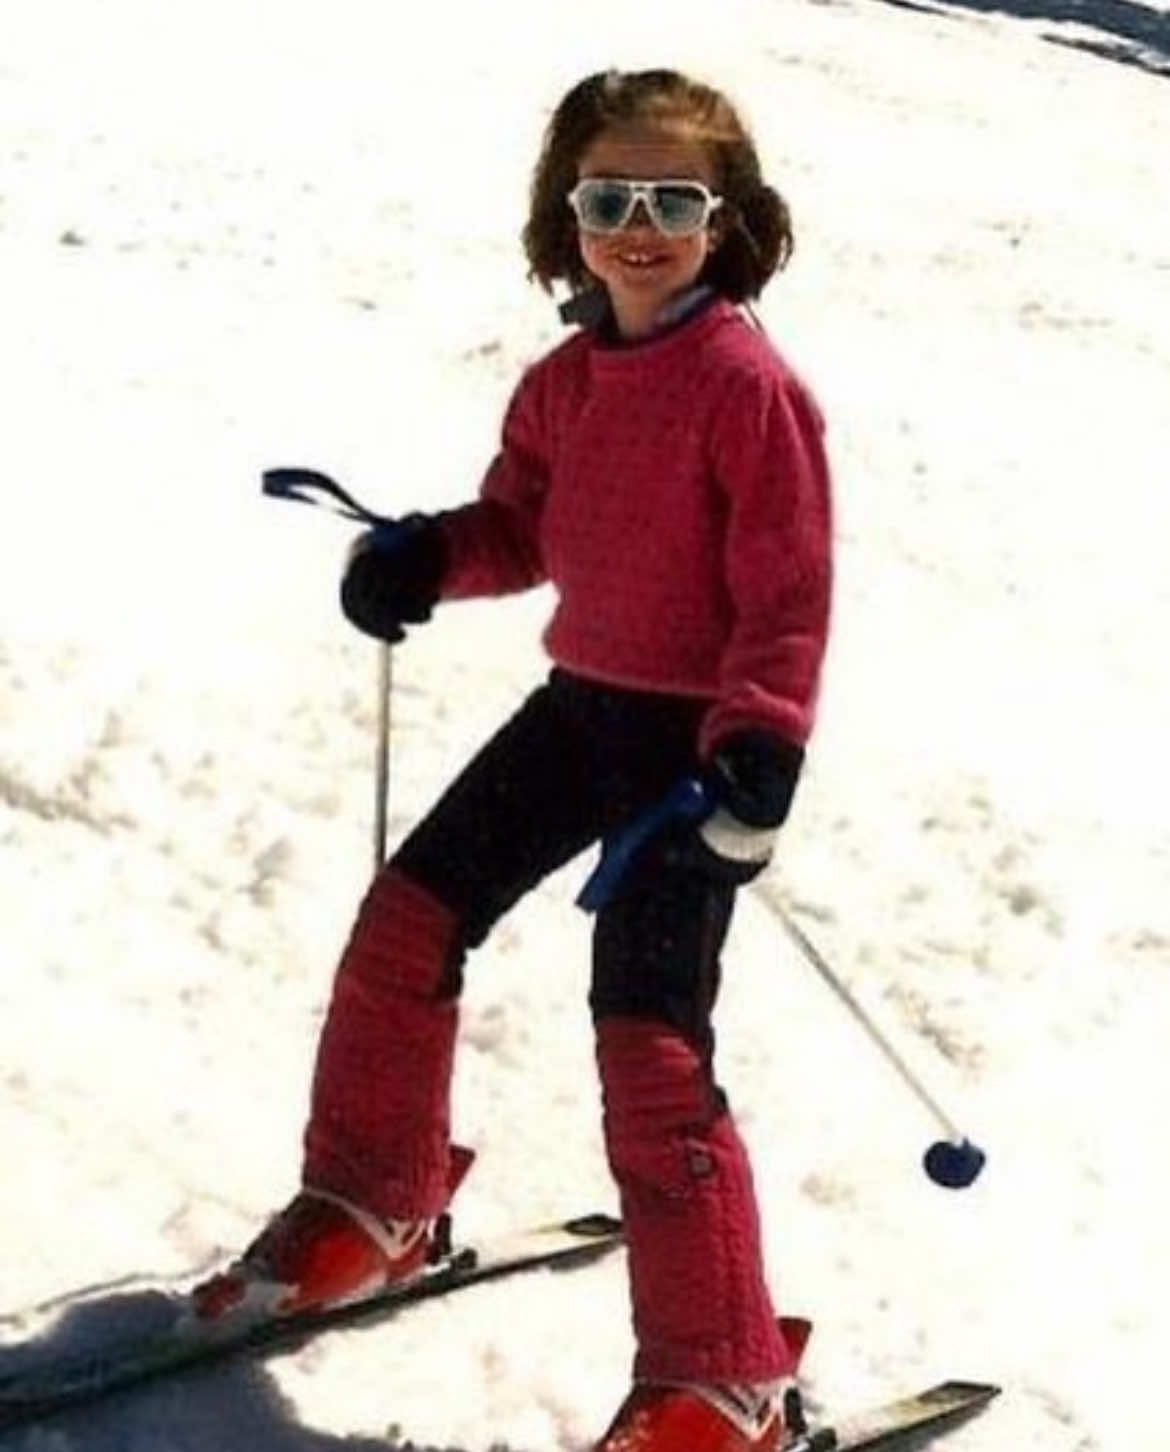 Young Morgan York Singer skiing